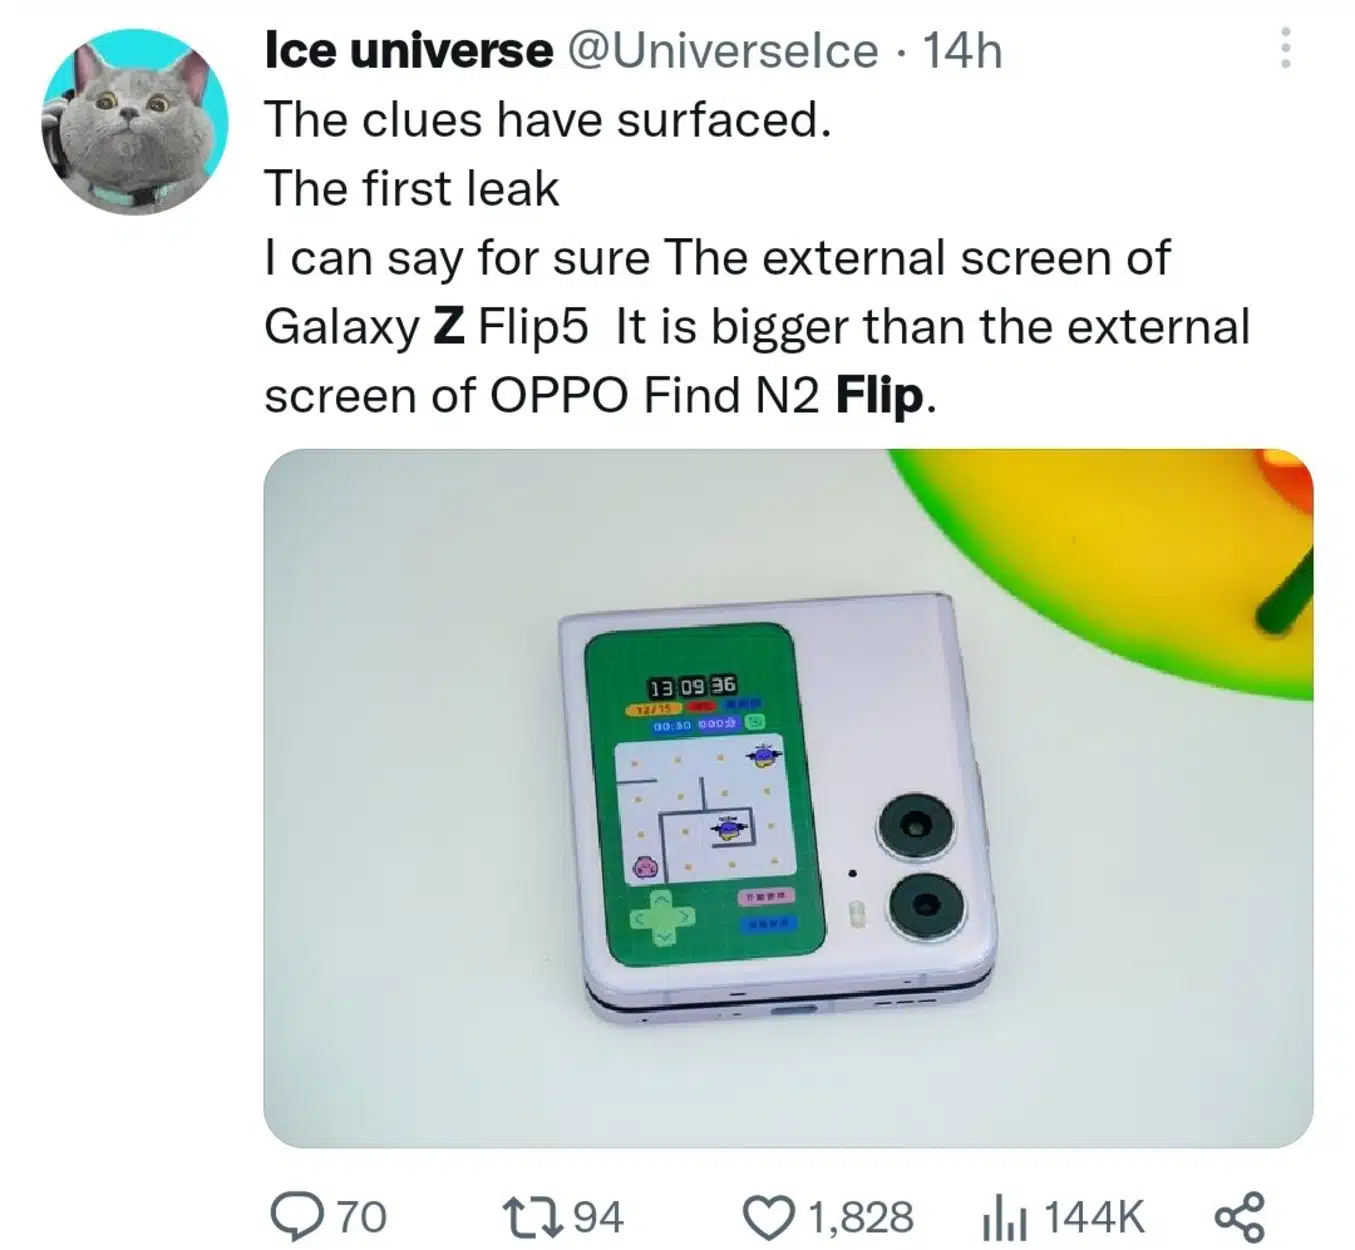 Ice universe tweet 